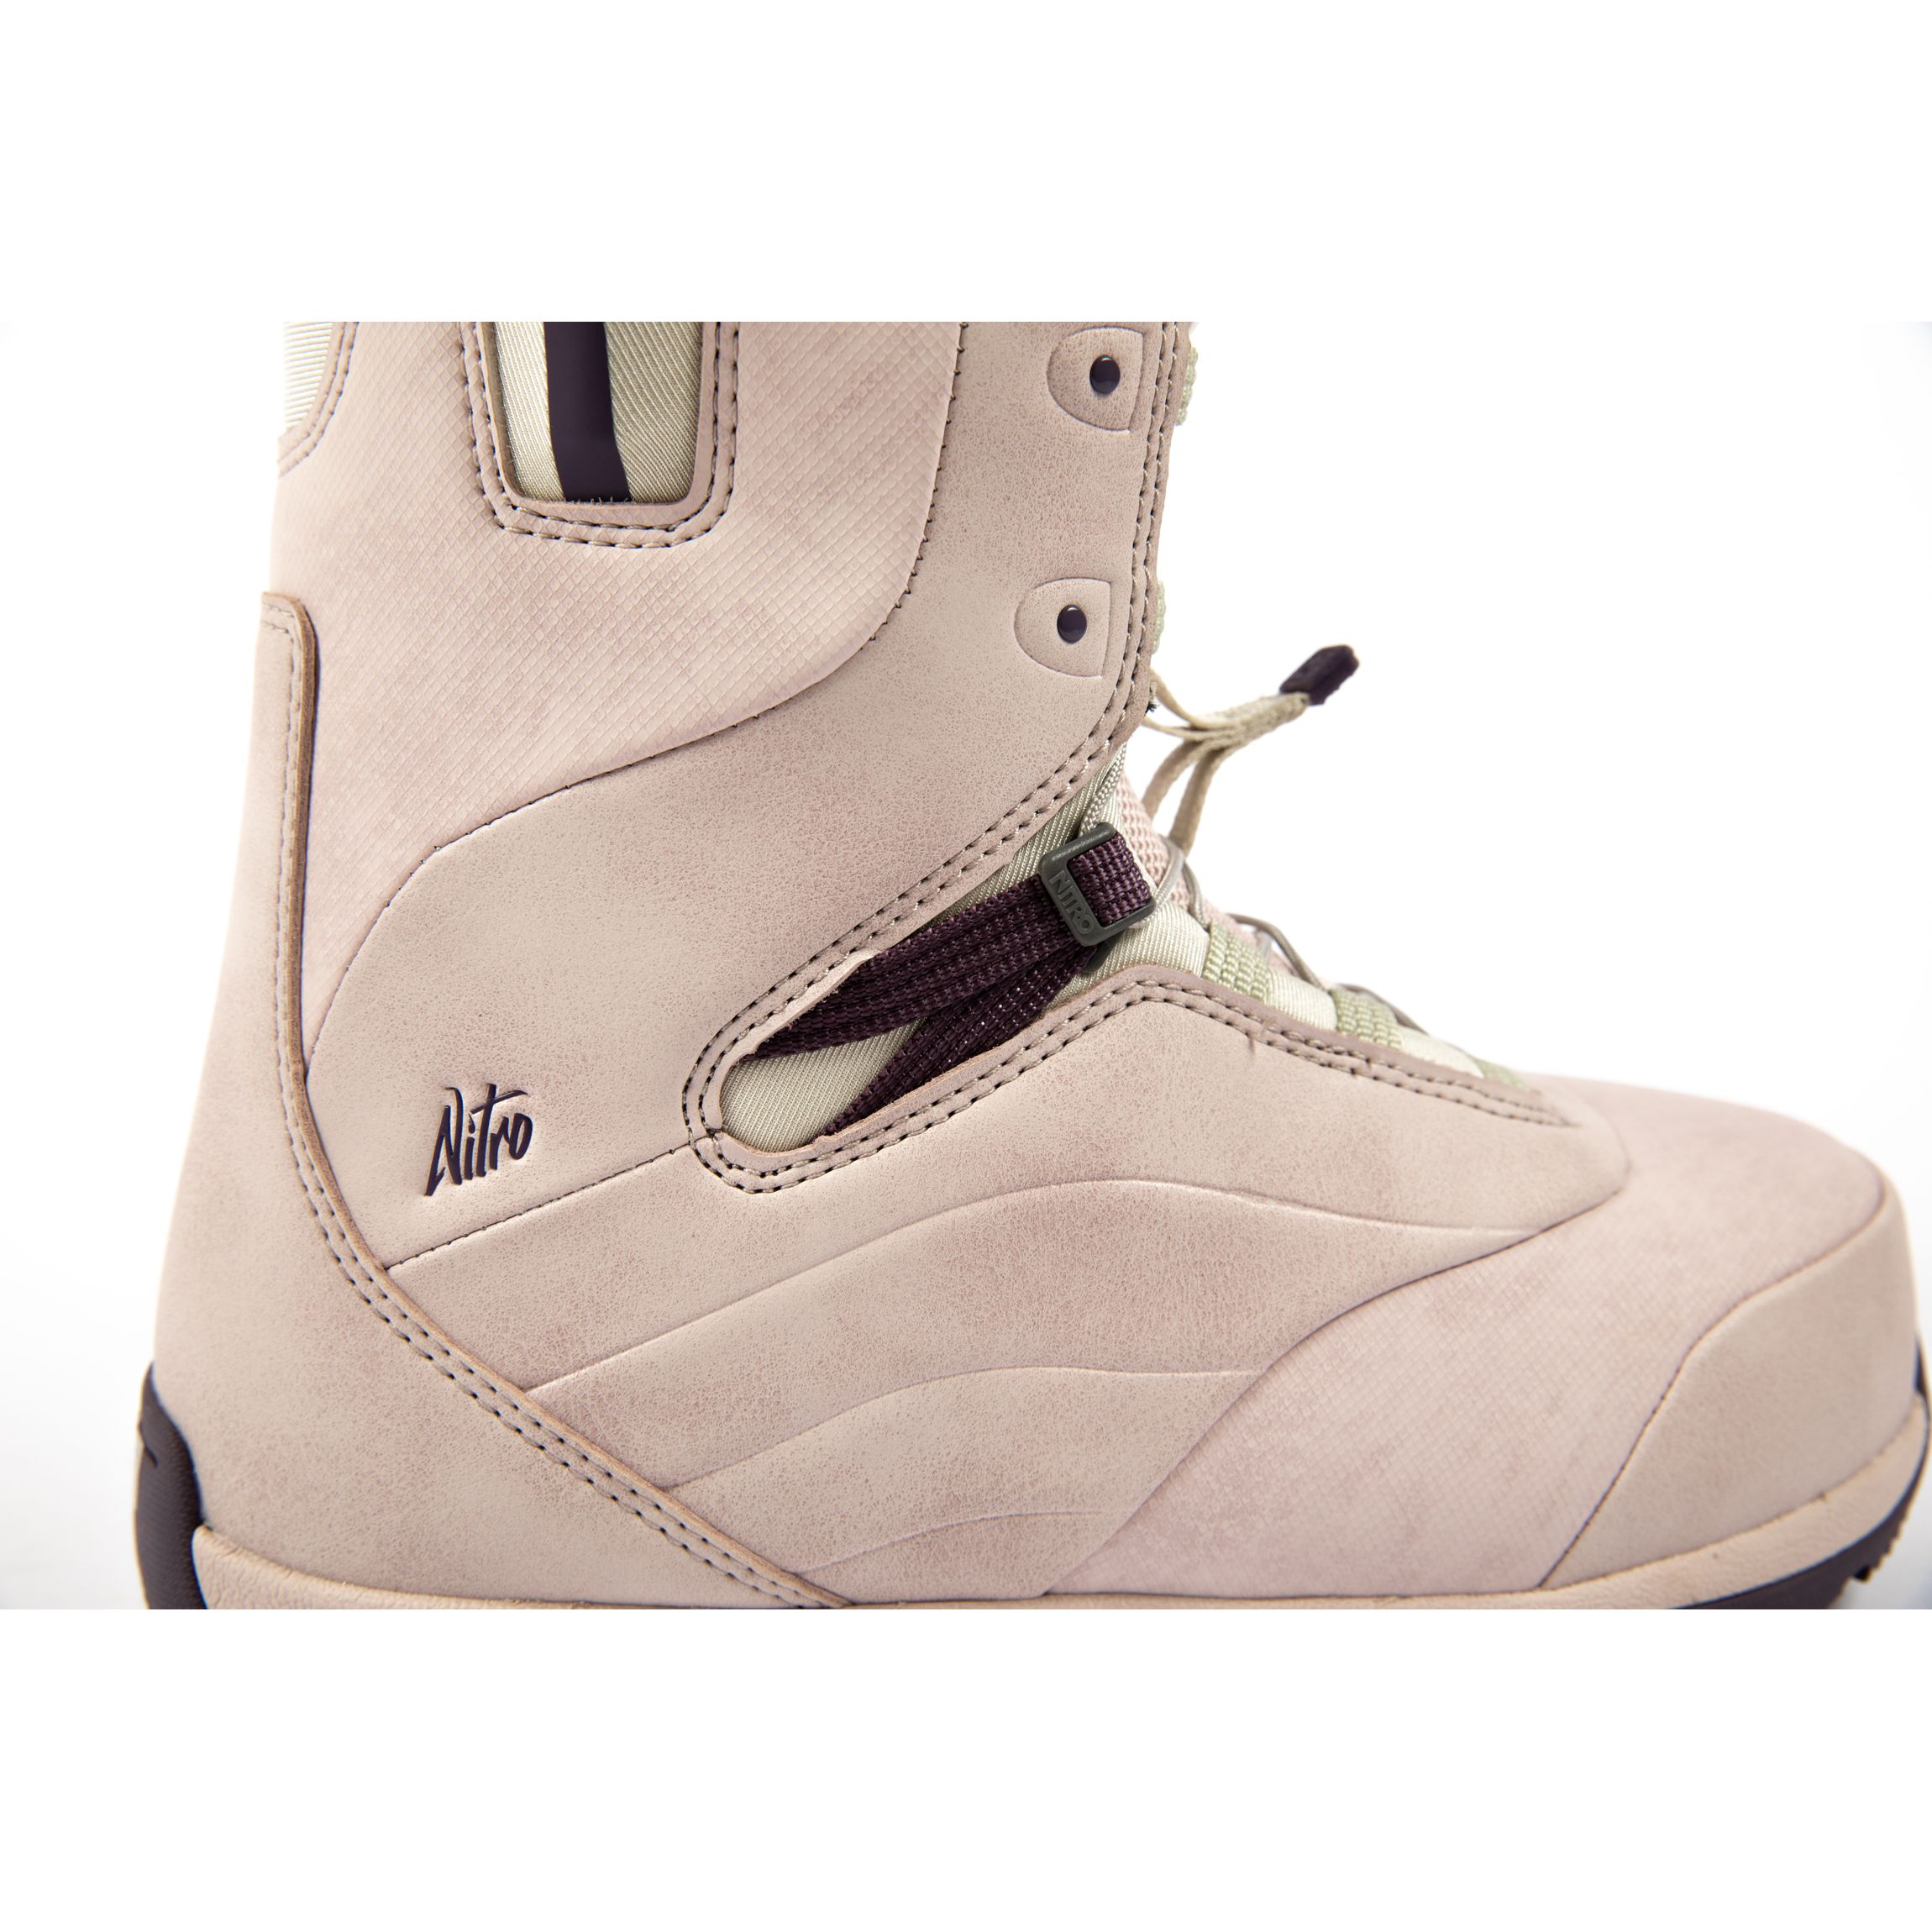 Boots Snowboard -  nitro Crown TLS